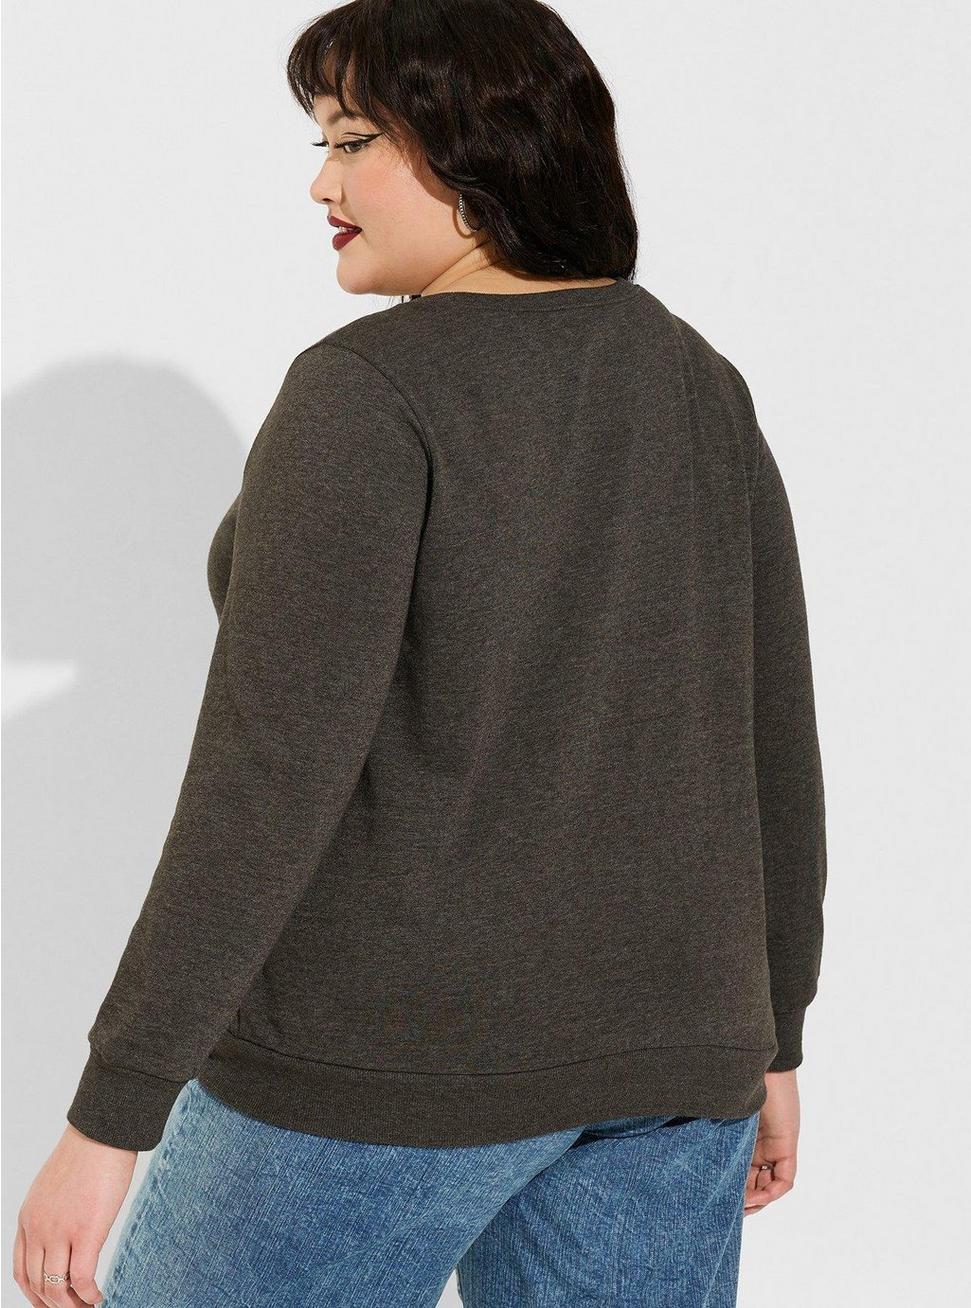 Plus Size - Peanuts Cozy Fleece Sweatshirt - Torrid